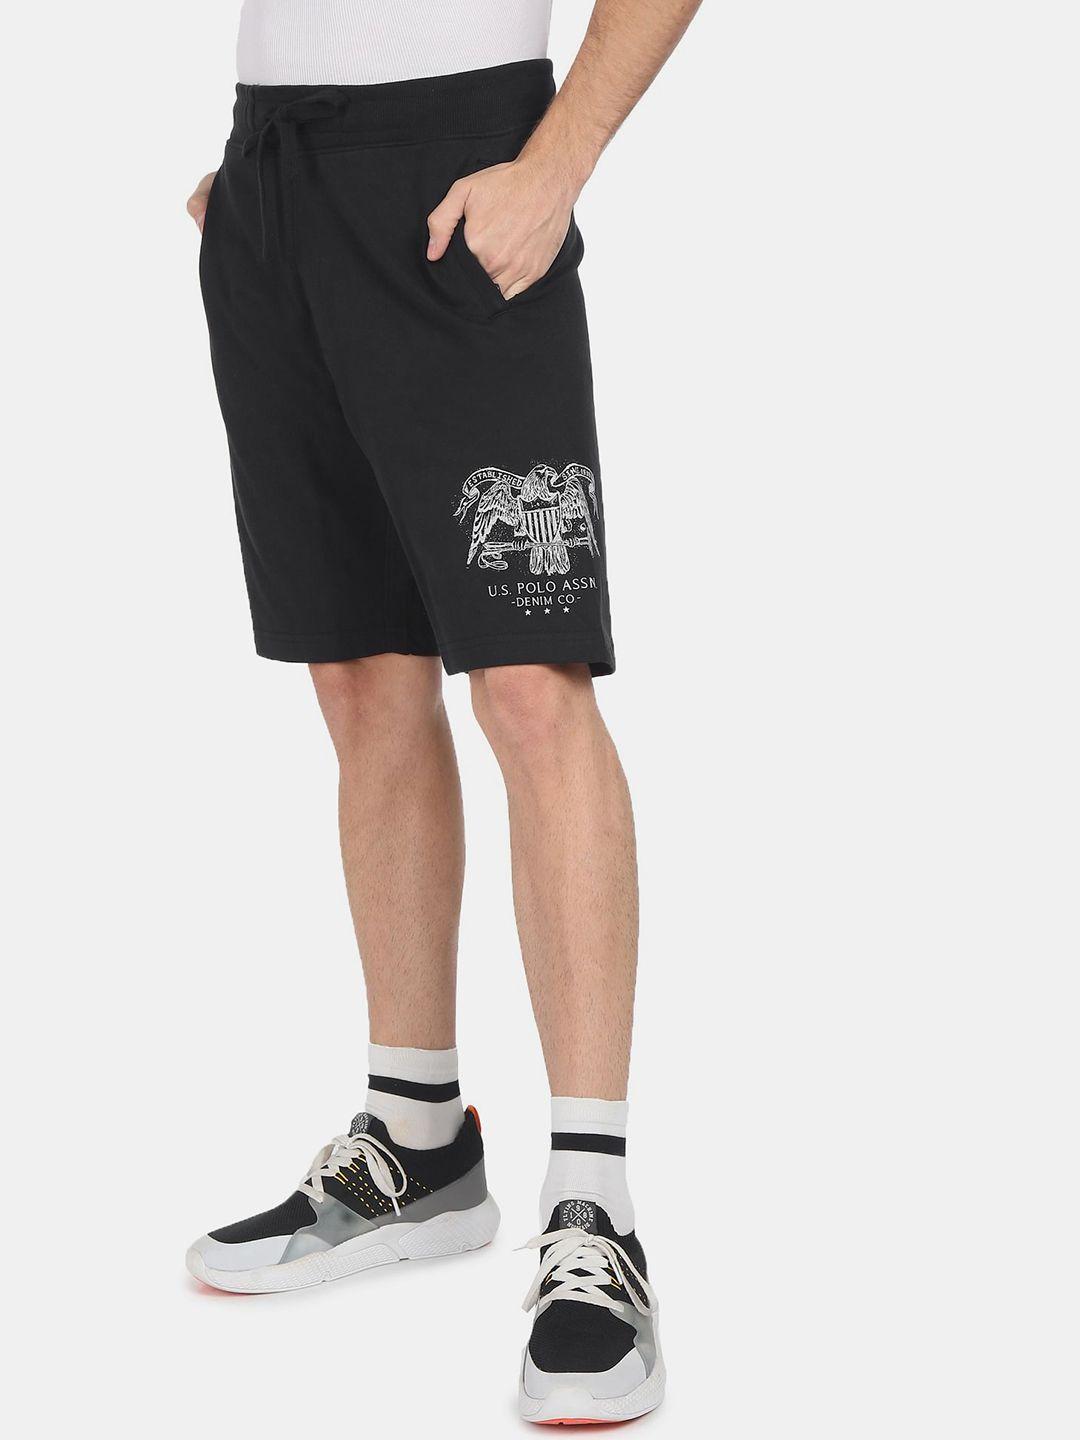 u-s-polo-assn-denim-co-men-black-&-white-printed-slim-fit-shorts